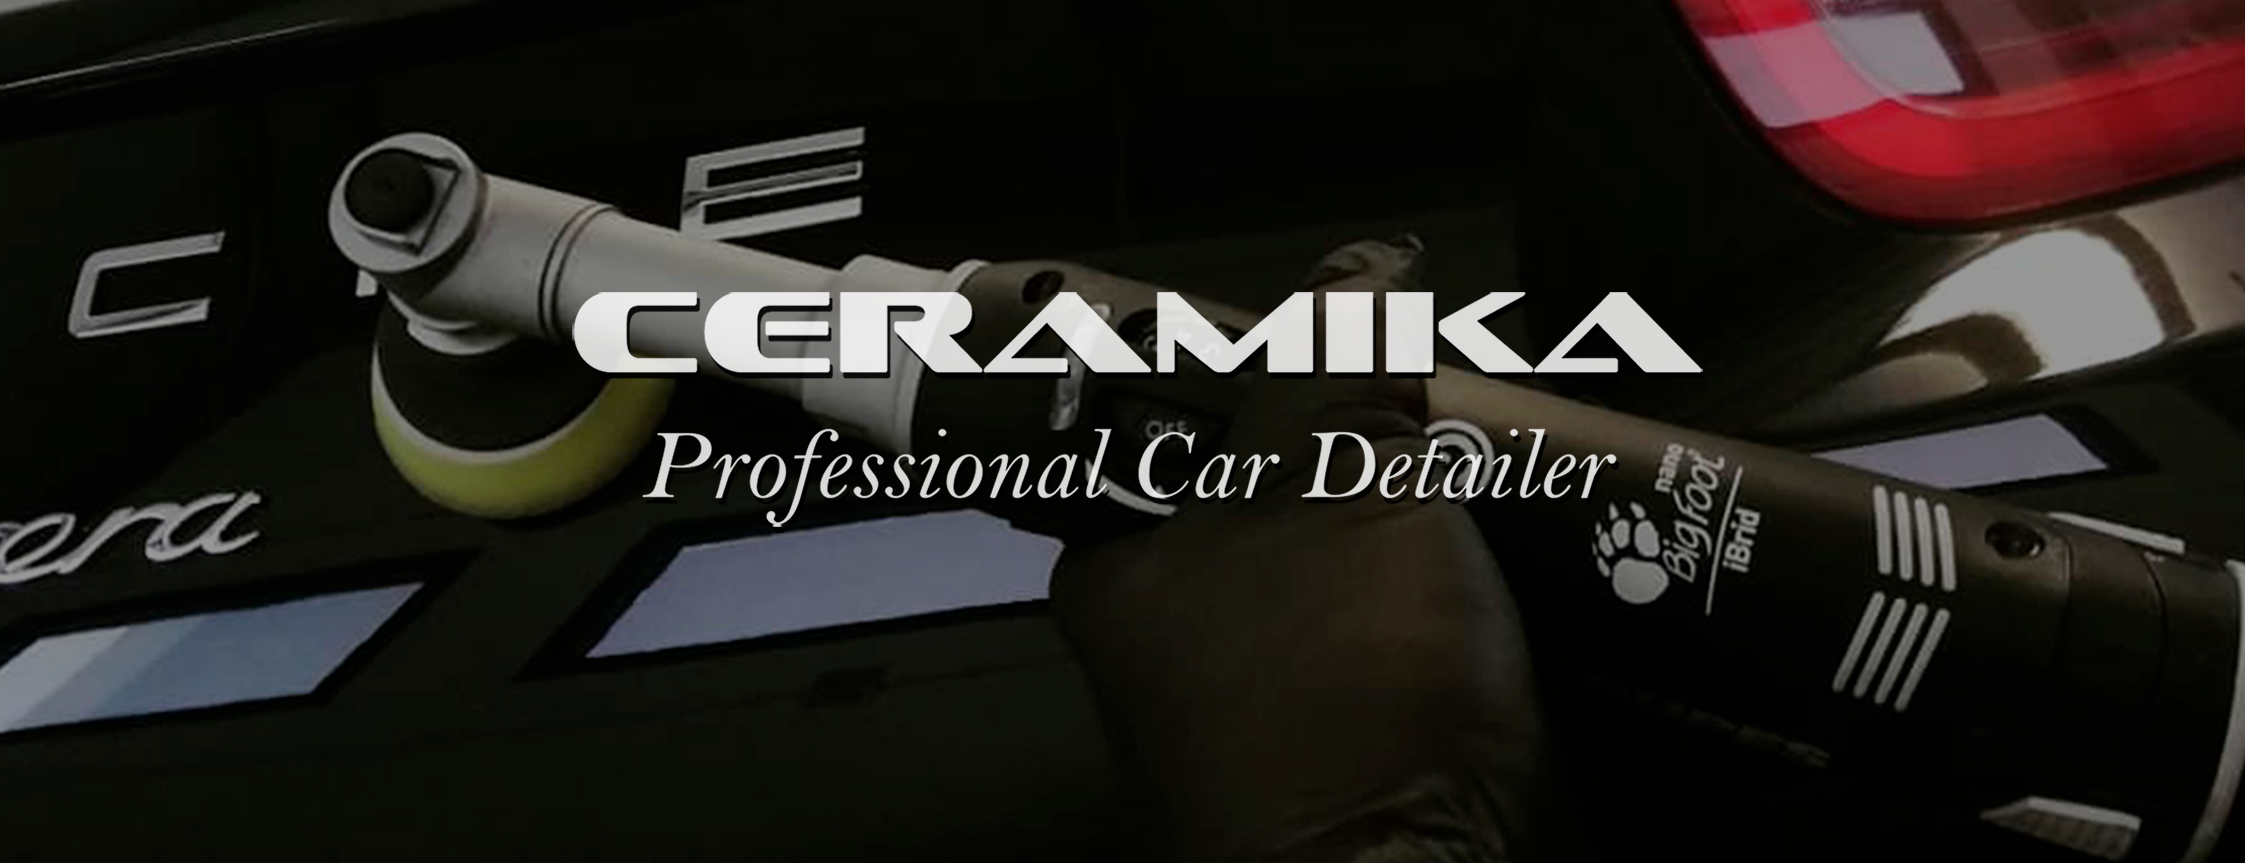 Ceramika - Professional Car Detailer